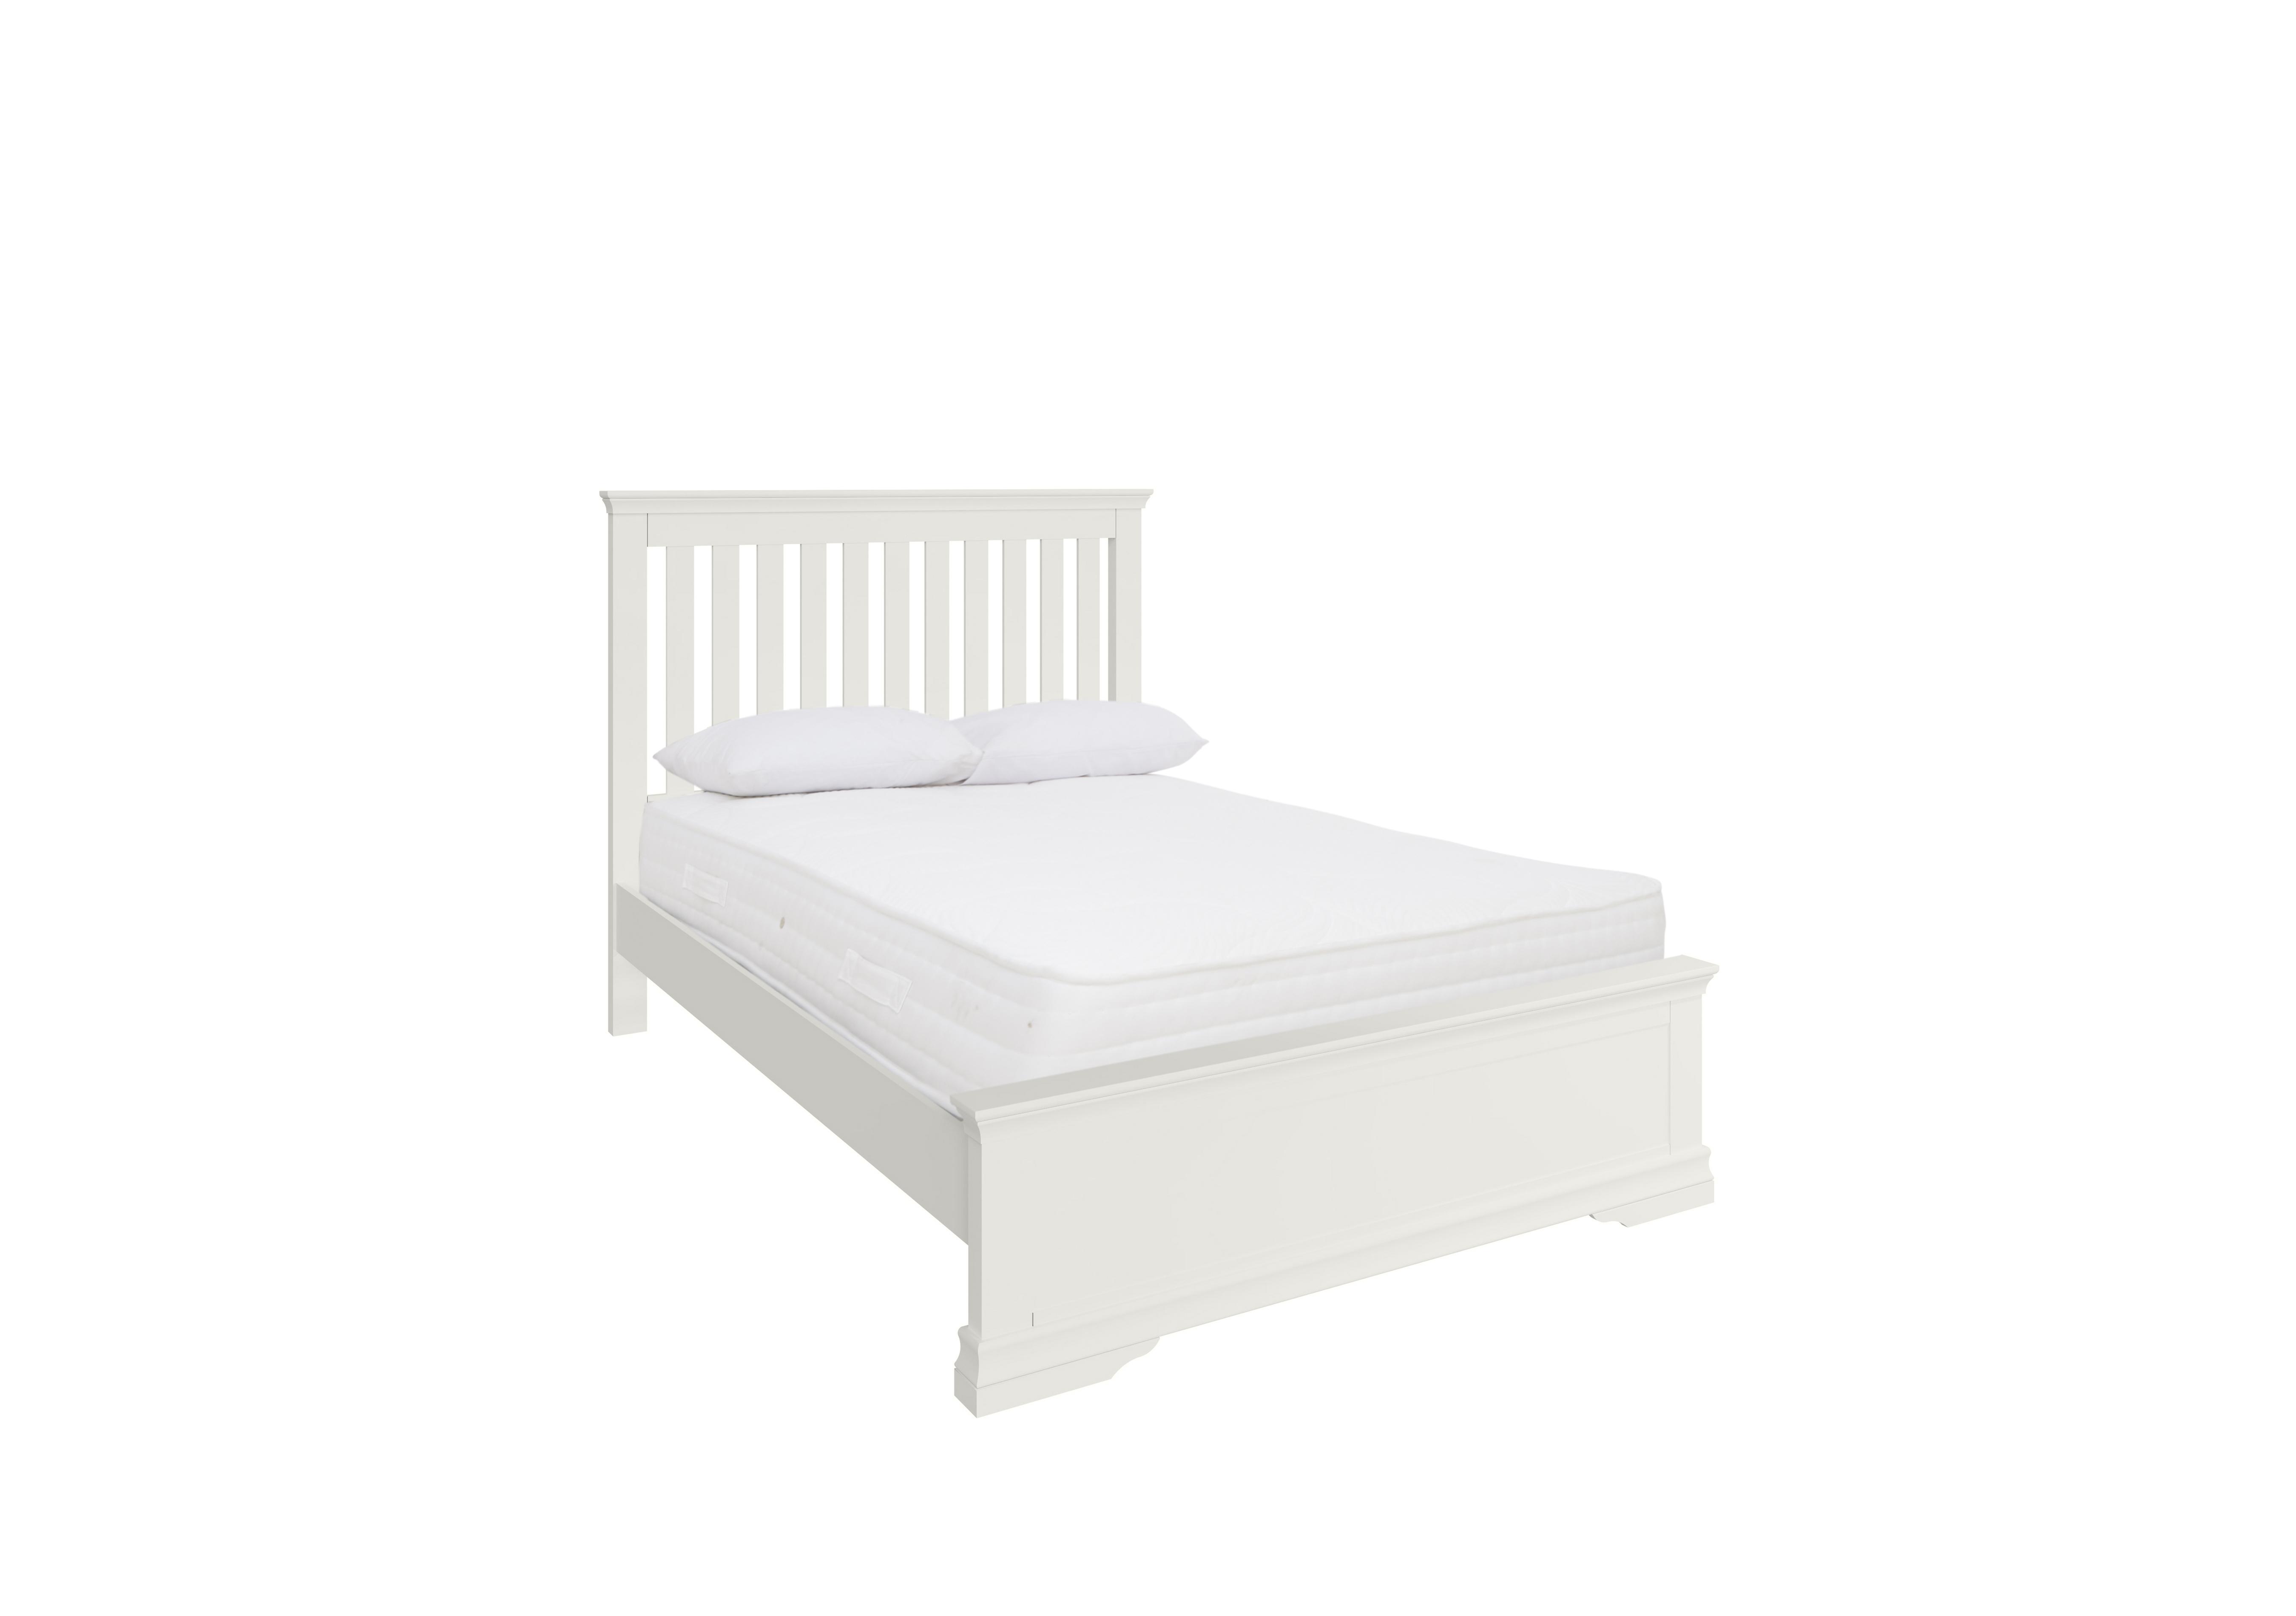 Tiverton Standard Bedframe in White on Furniture Village